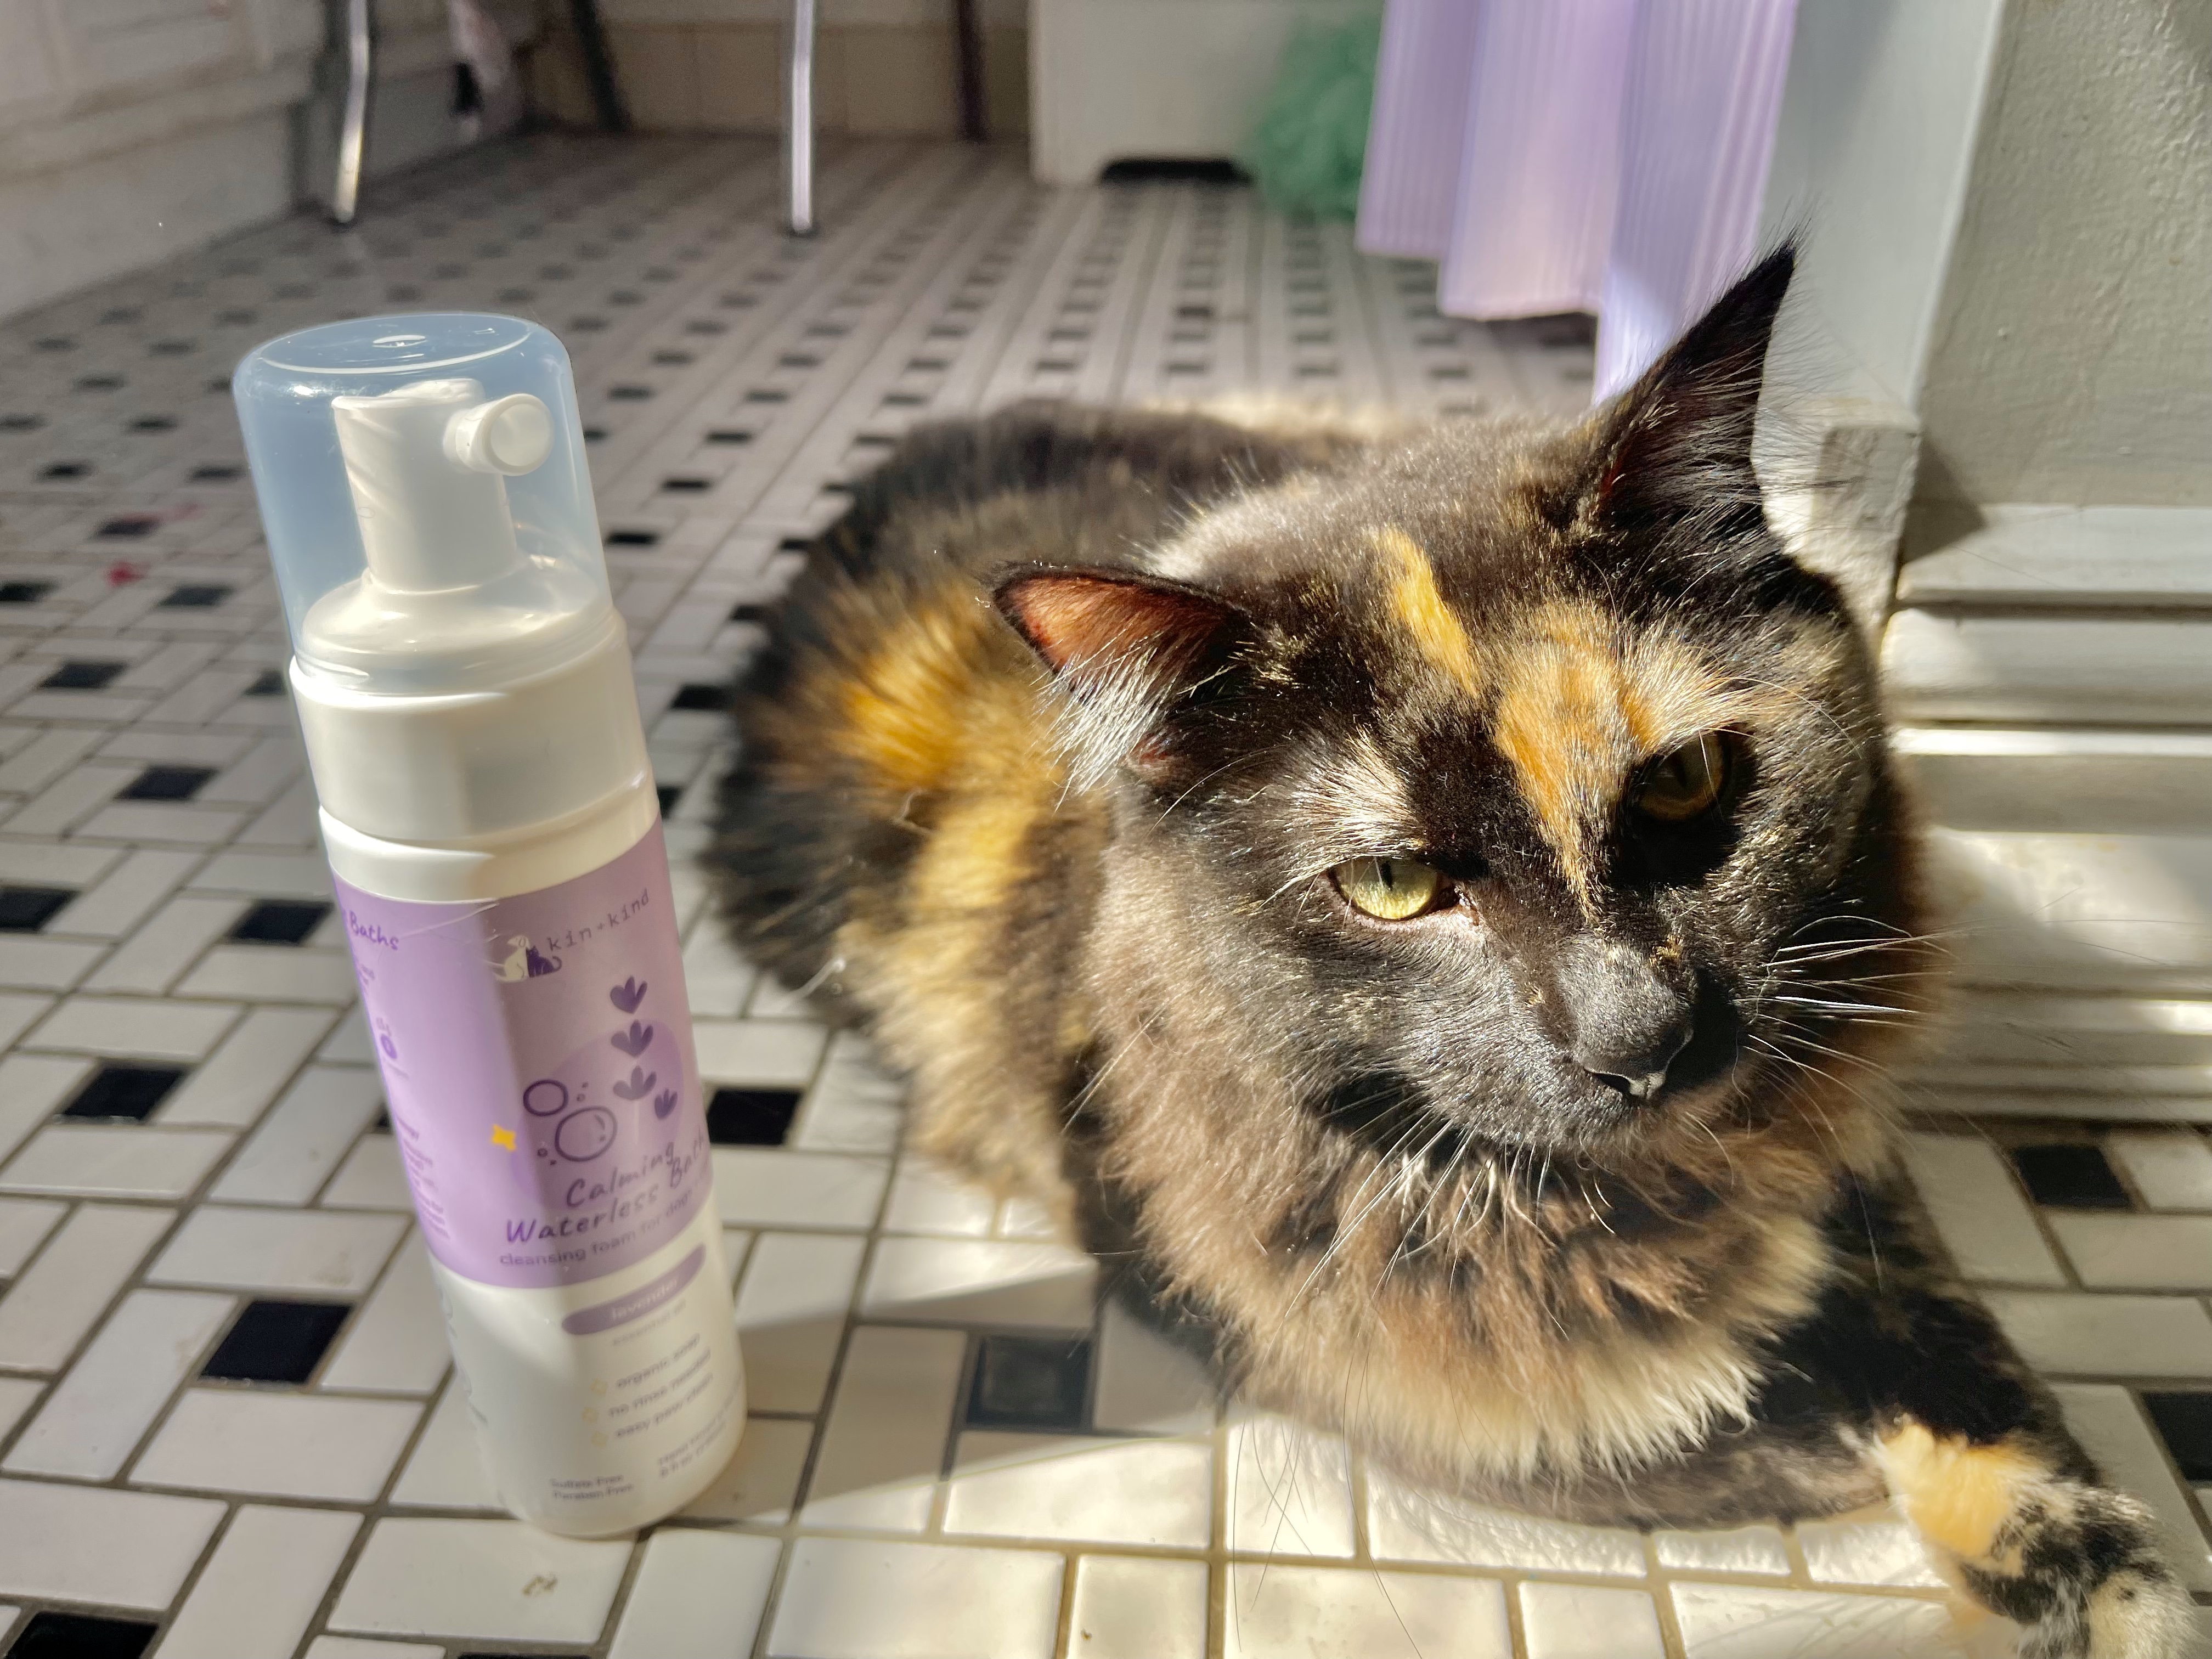 Gigi the cat posing next to a bottle of waterless pet shampoo